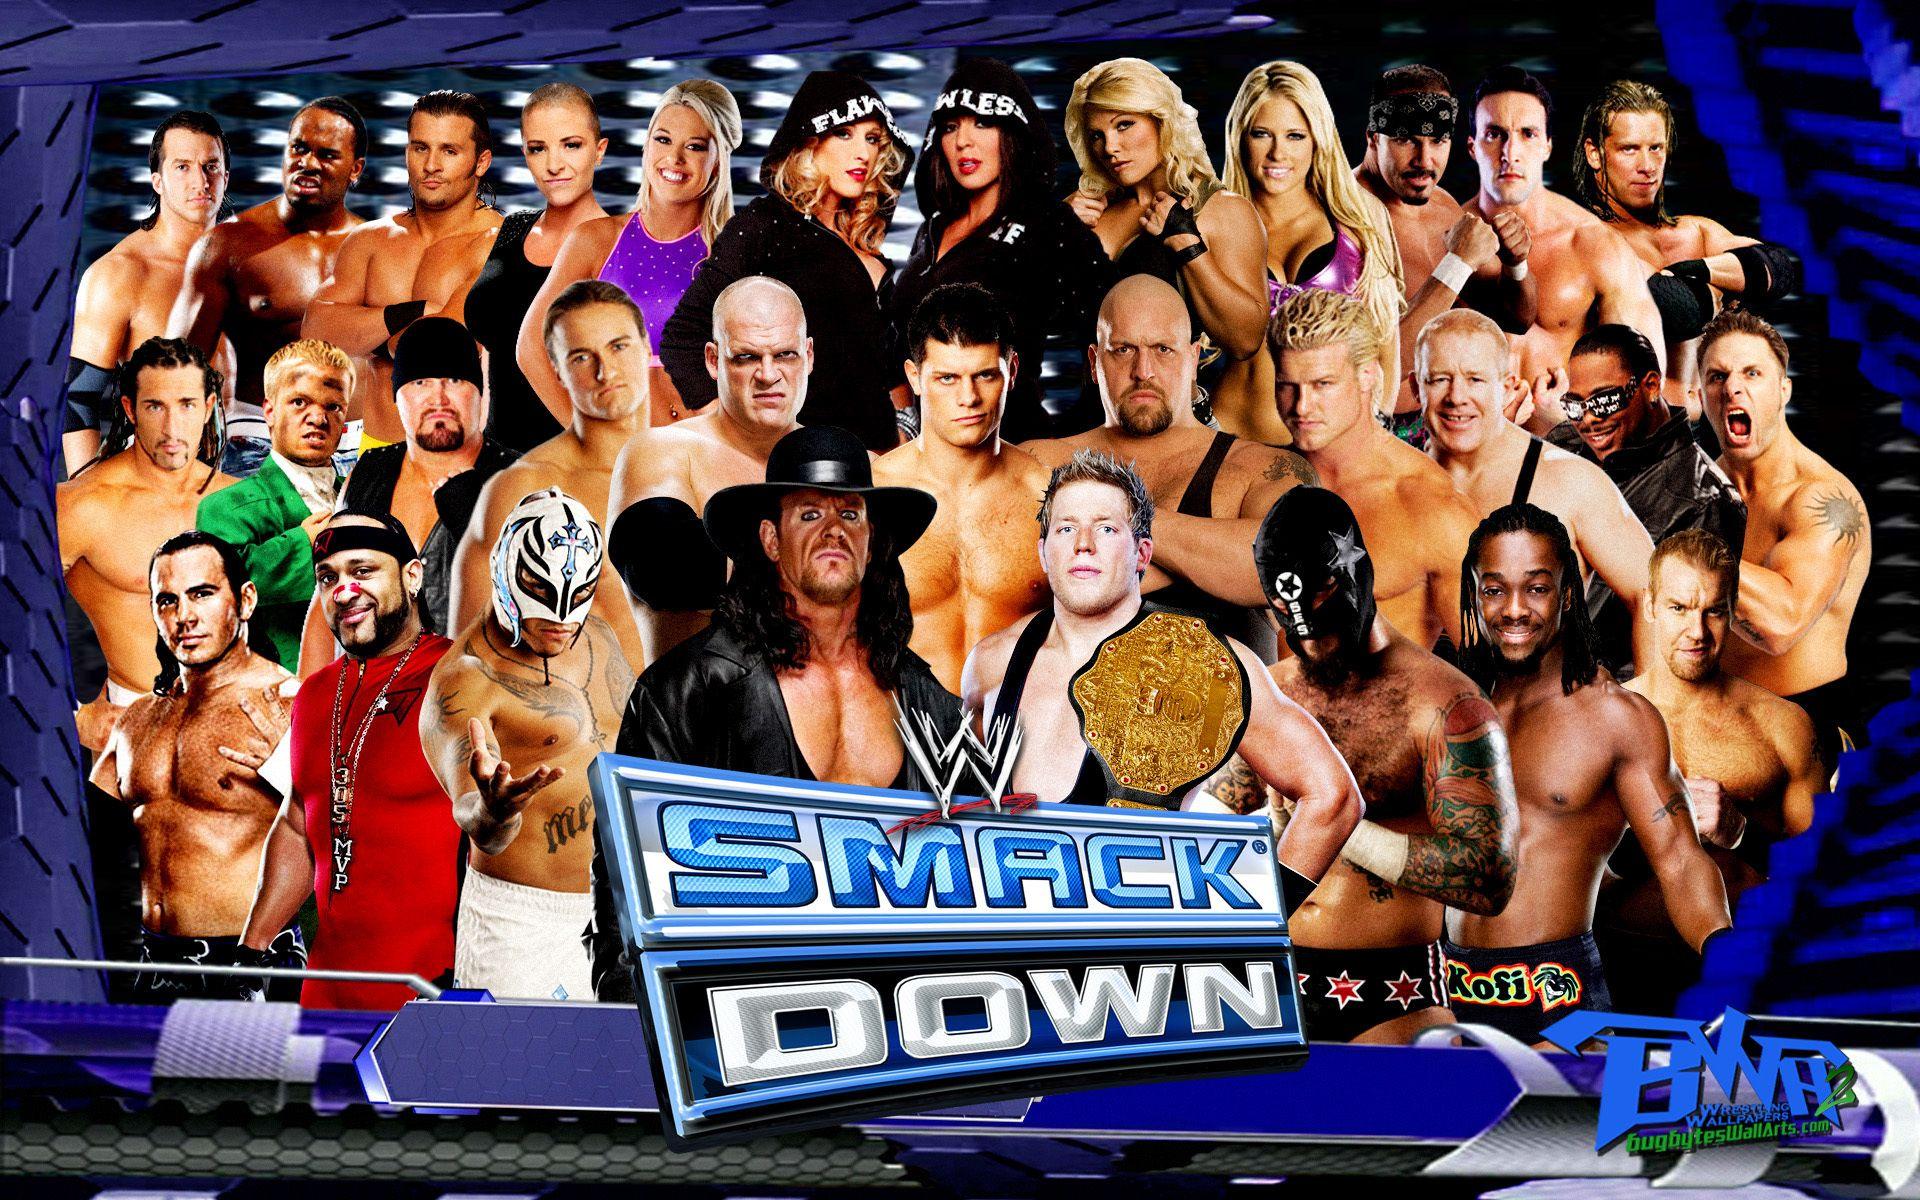 WWE Smackdown vs raw 2013 Free Download. Wwe, Wwe wallpaper, Wwe